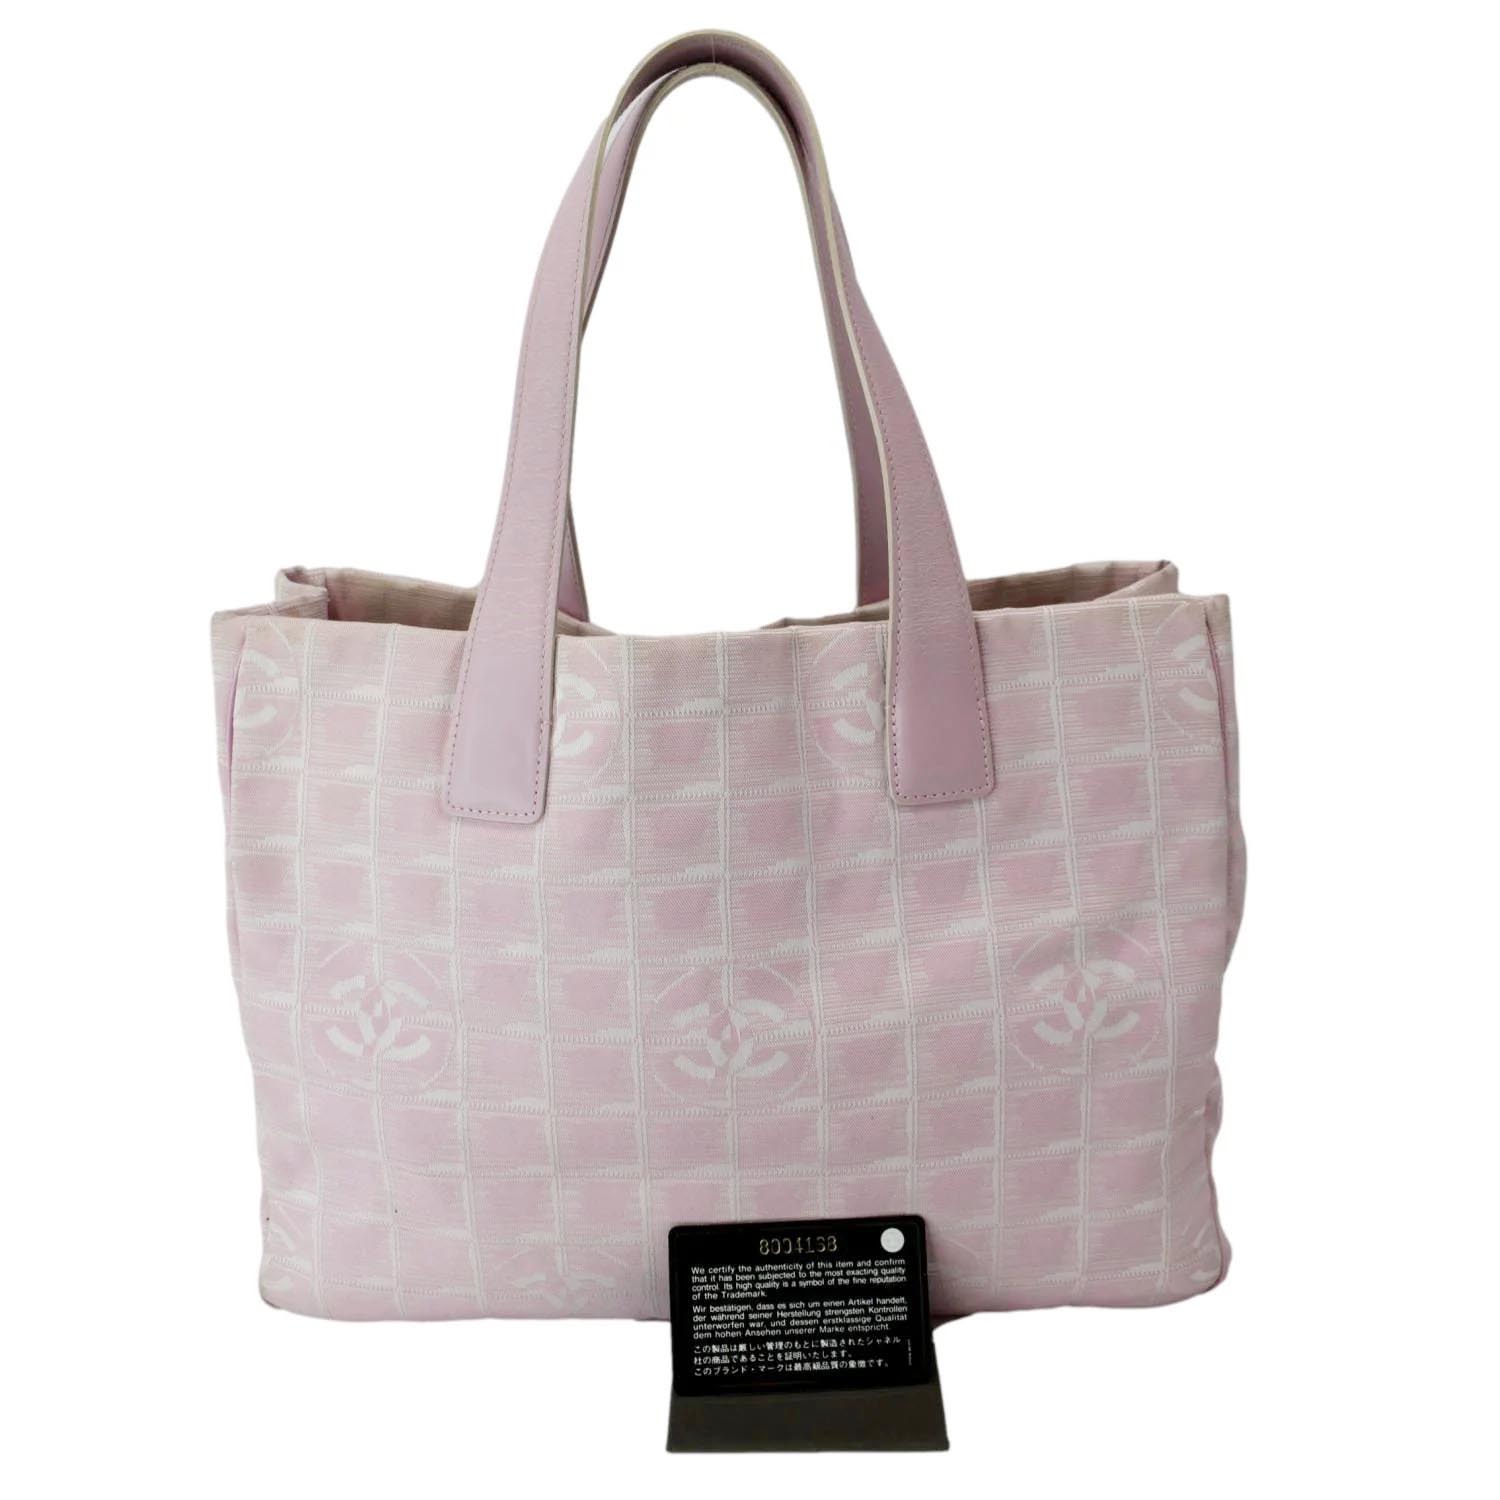 Instant download Vuitton, Chanel and Birkin bag. Designer purse